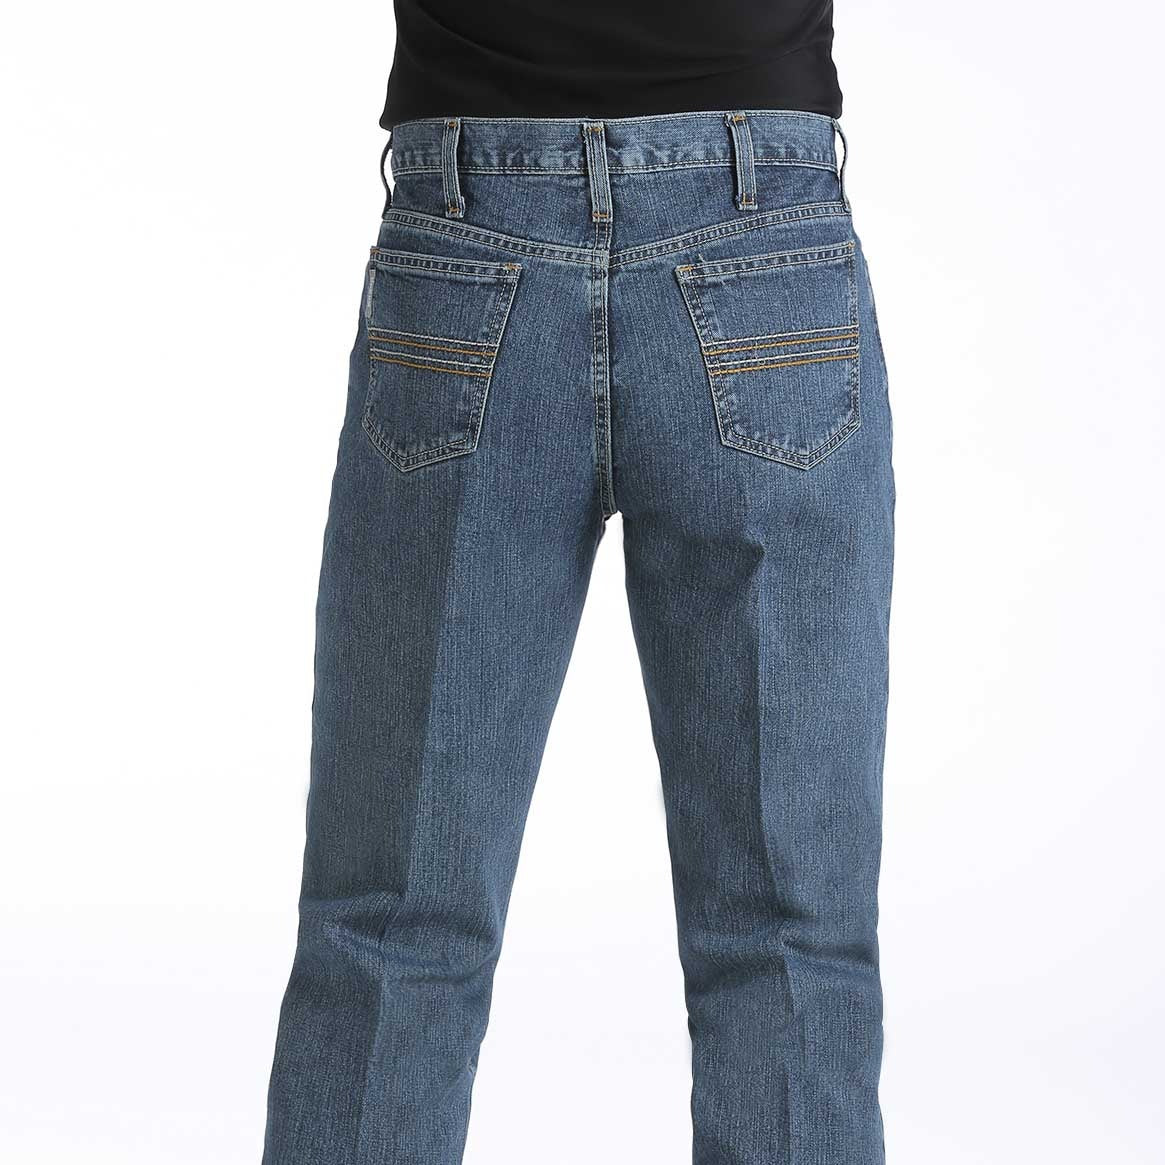 Cinch Men's Silver Label Slim Fit Jean in Medium Stone